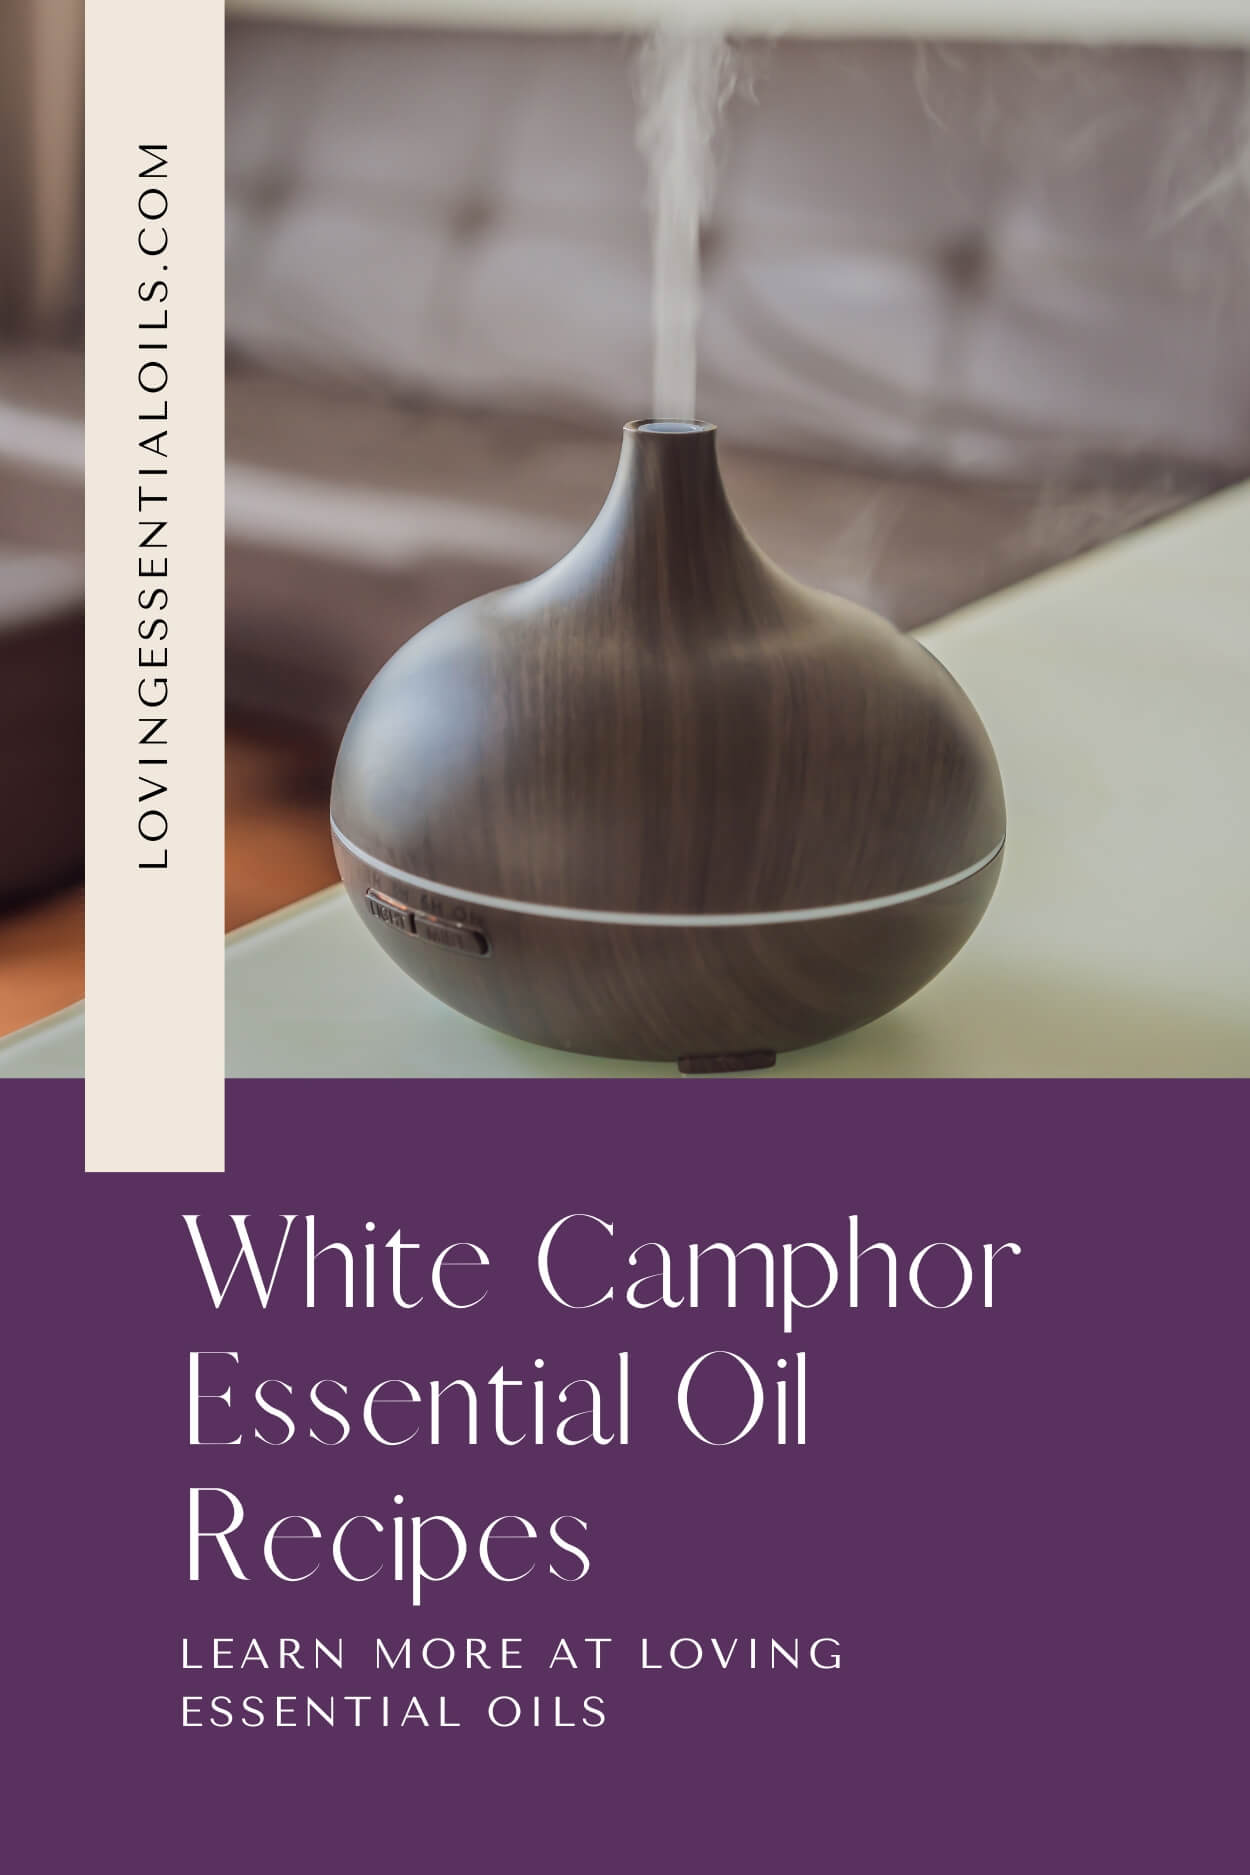 White Camphor Essential Oil Recipes by Loving Essential Oils